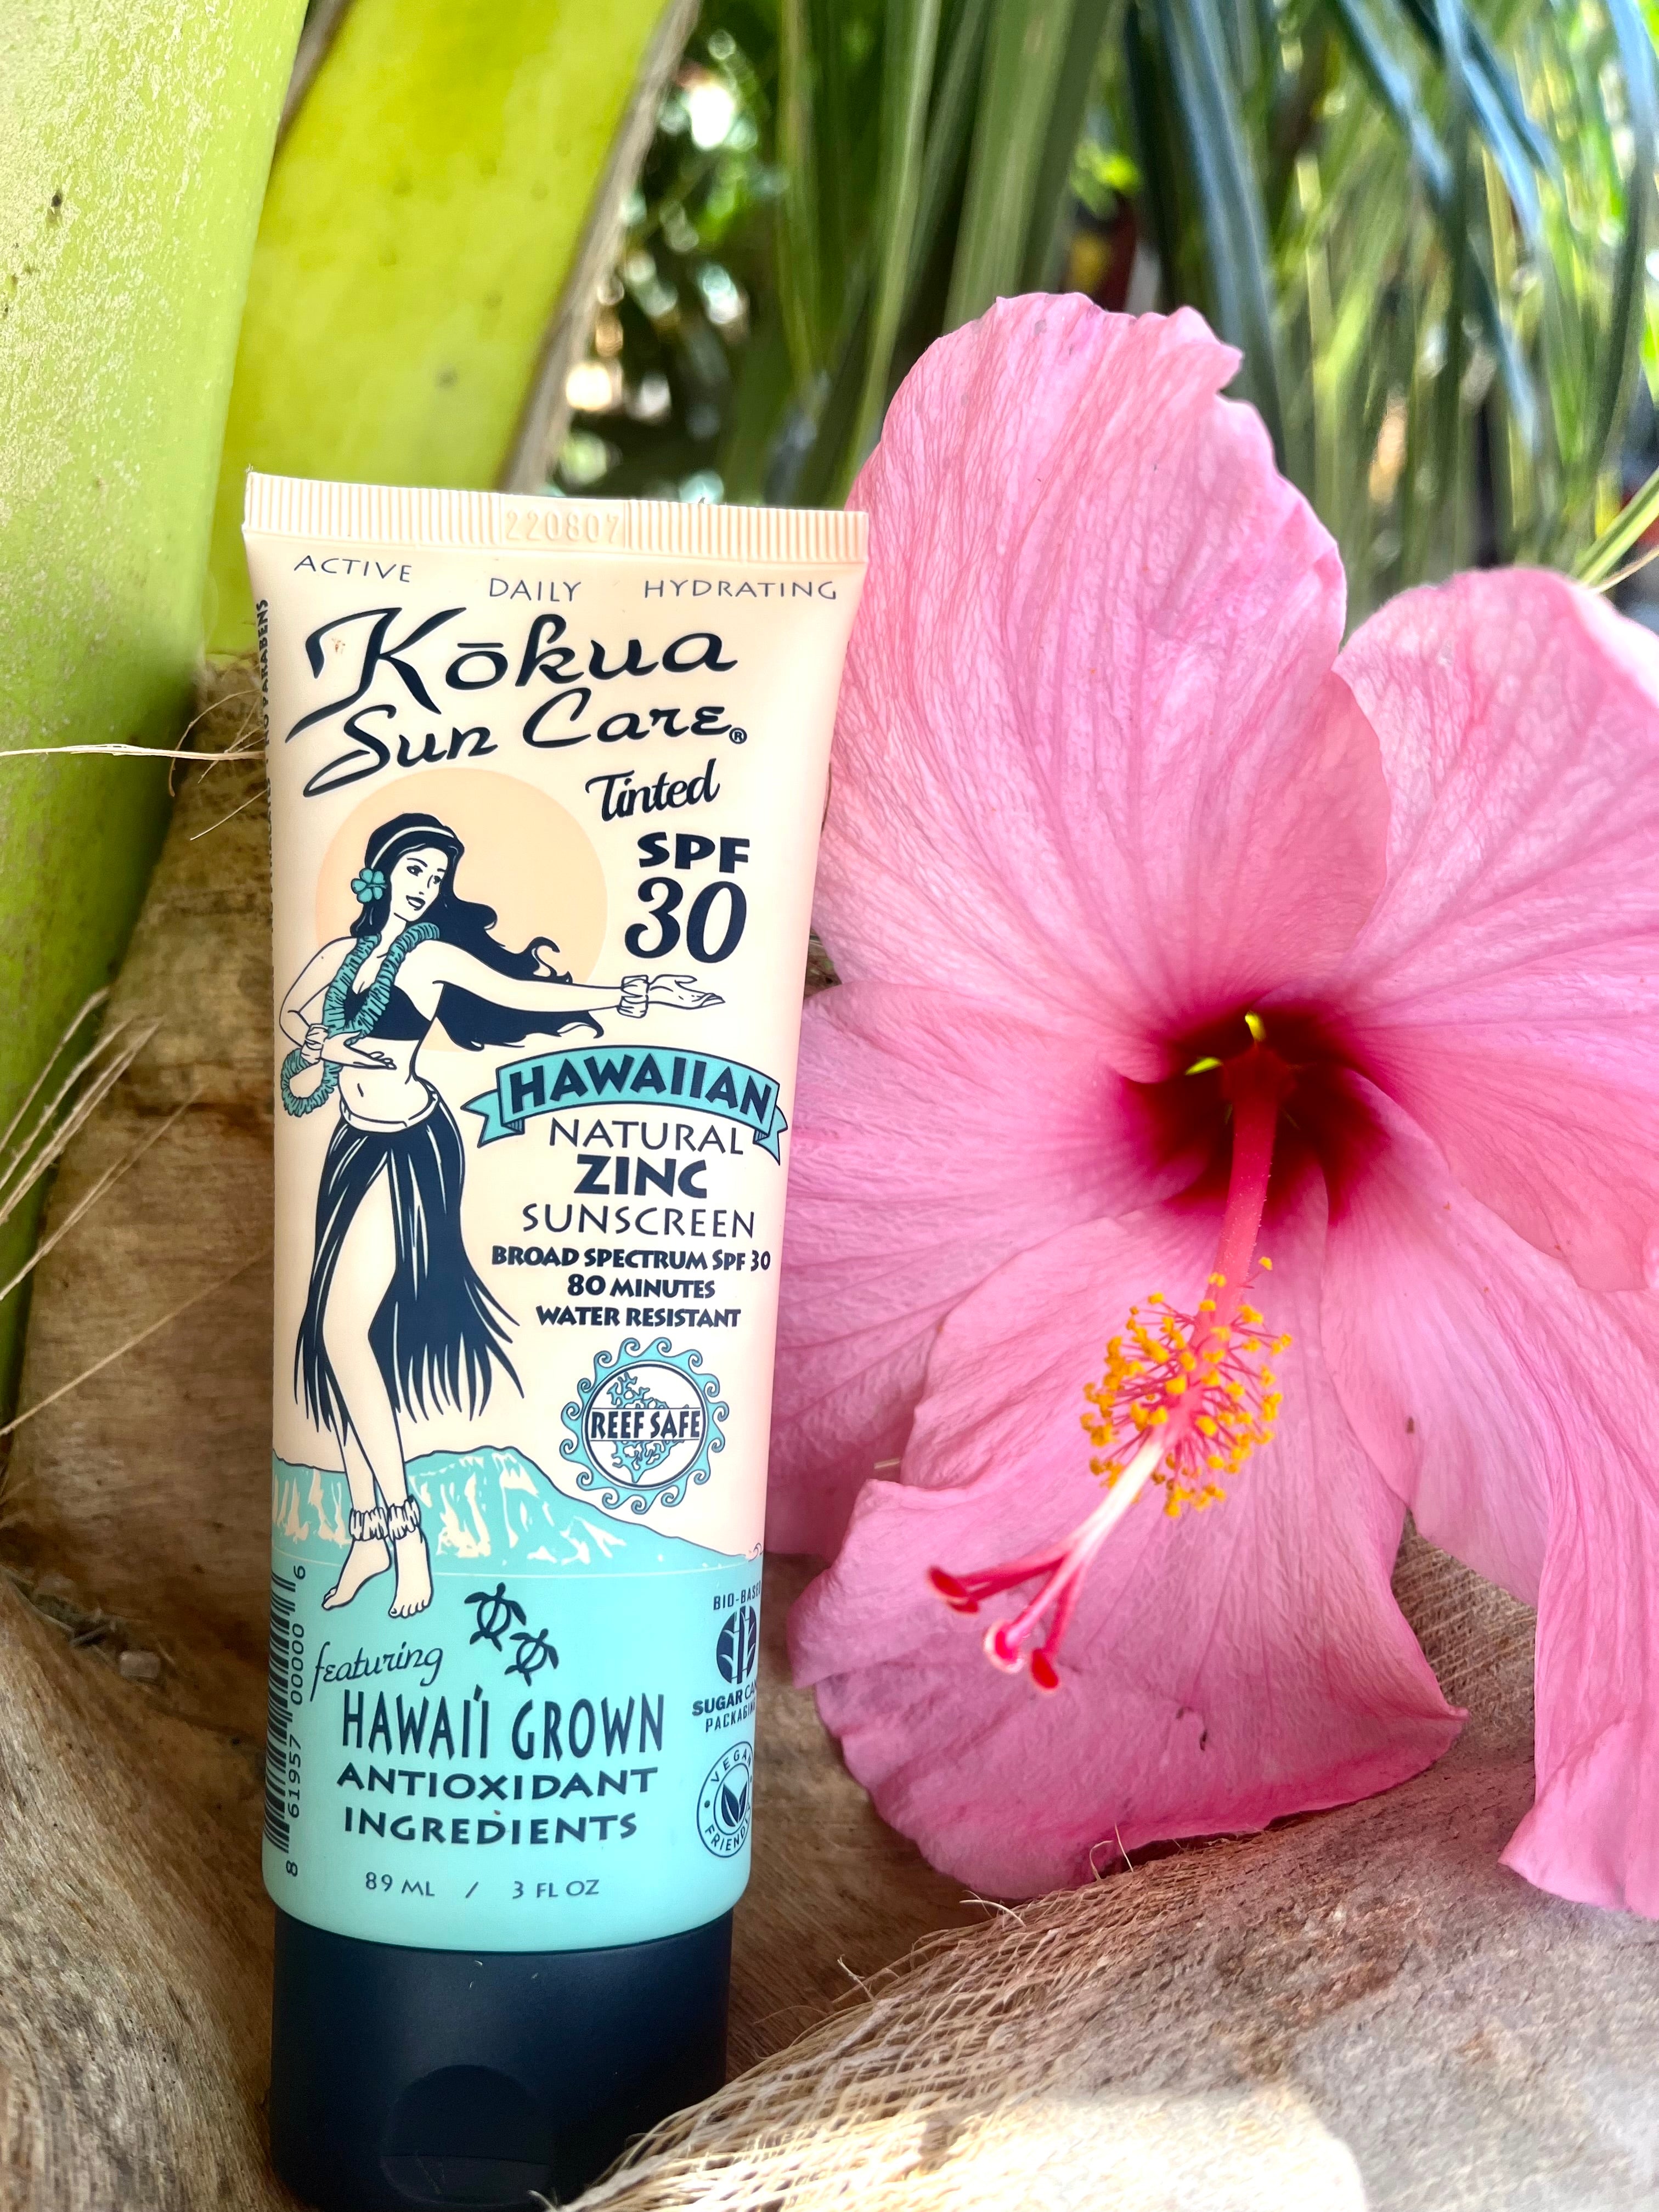 It’s HERE! Hawaiian Natural Zinc Sunscreen SPF 30 TINTED